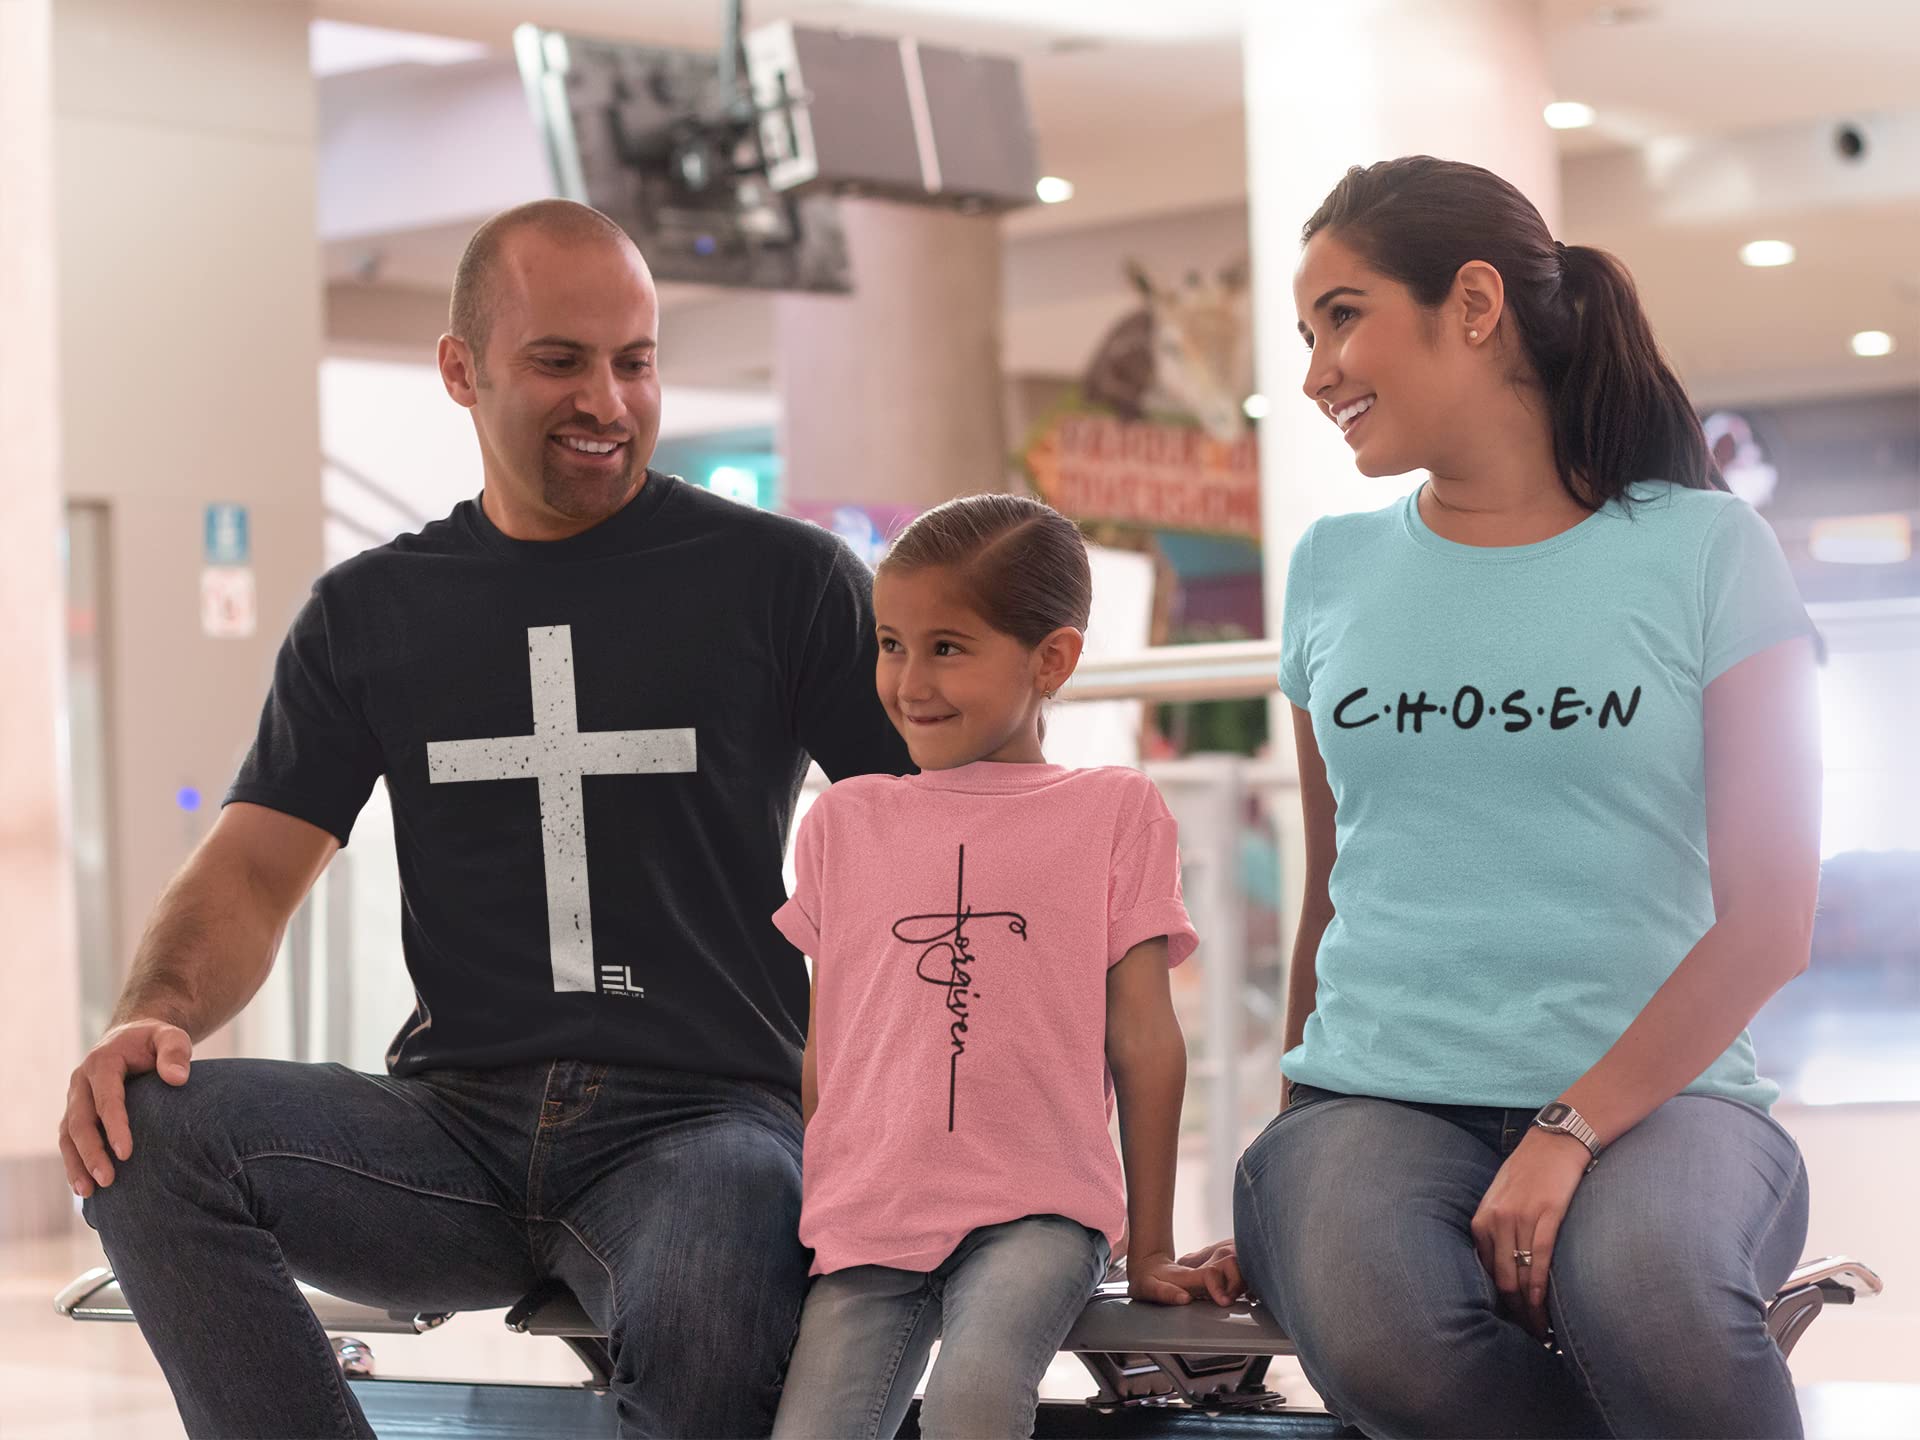 Man of God Nail Cross Crown of Thorns Mens Christian Short Sleeve T-Shirt Graphic Tee